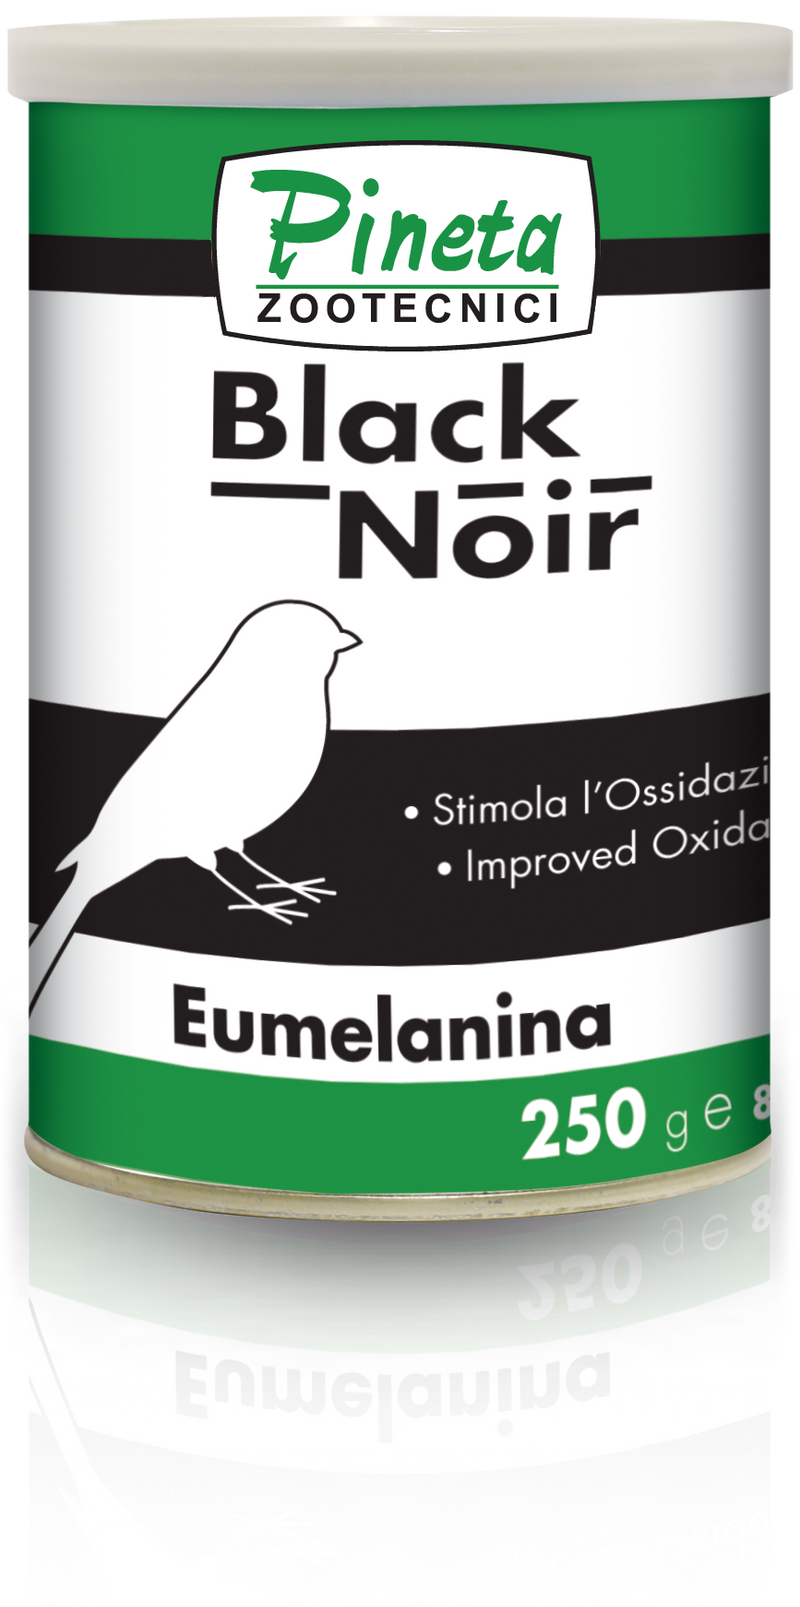 Blacknoir - Black factor colorant (Pineta Zootecnici)